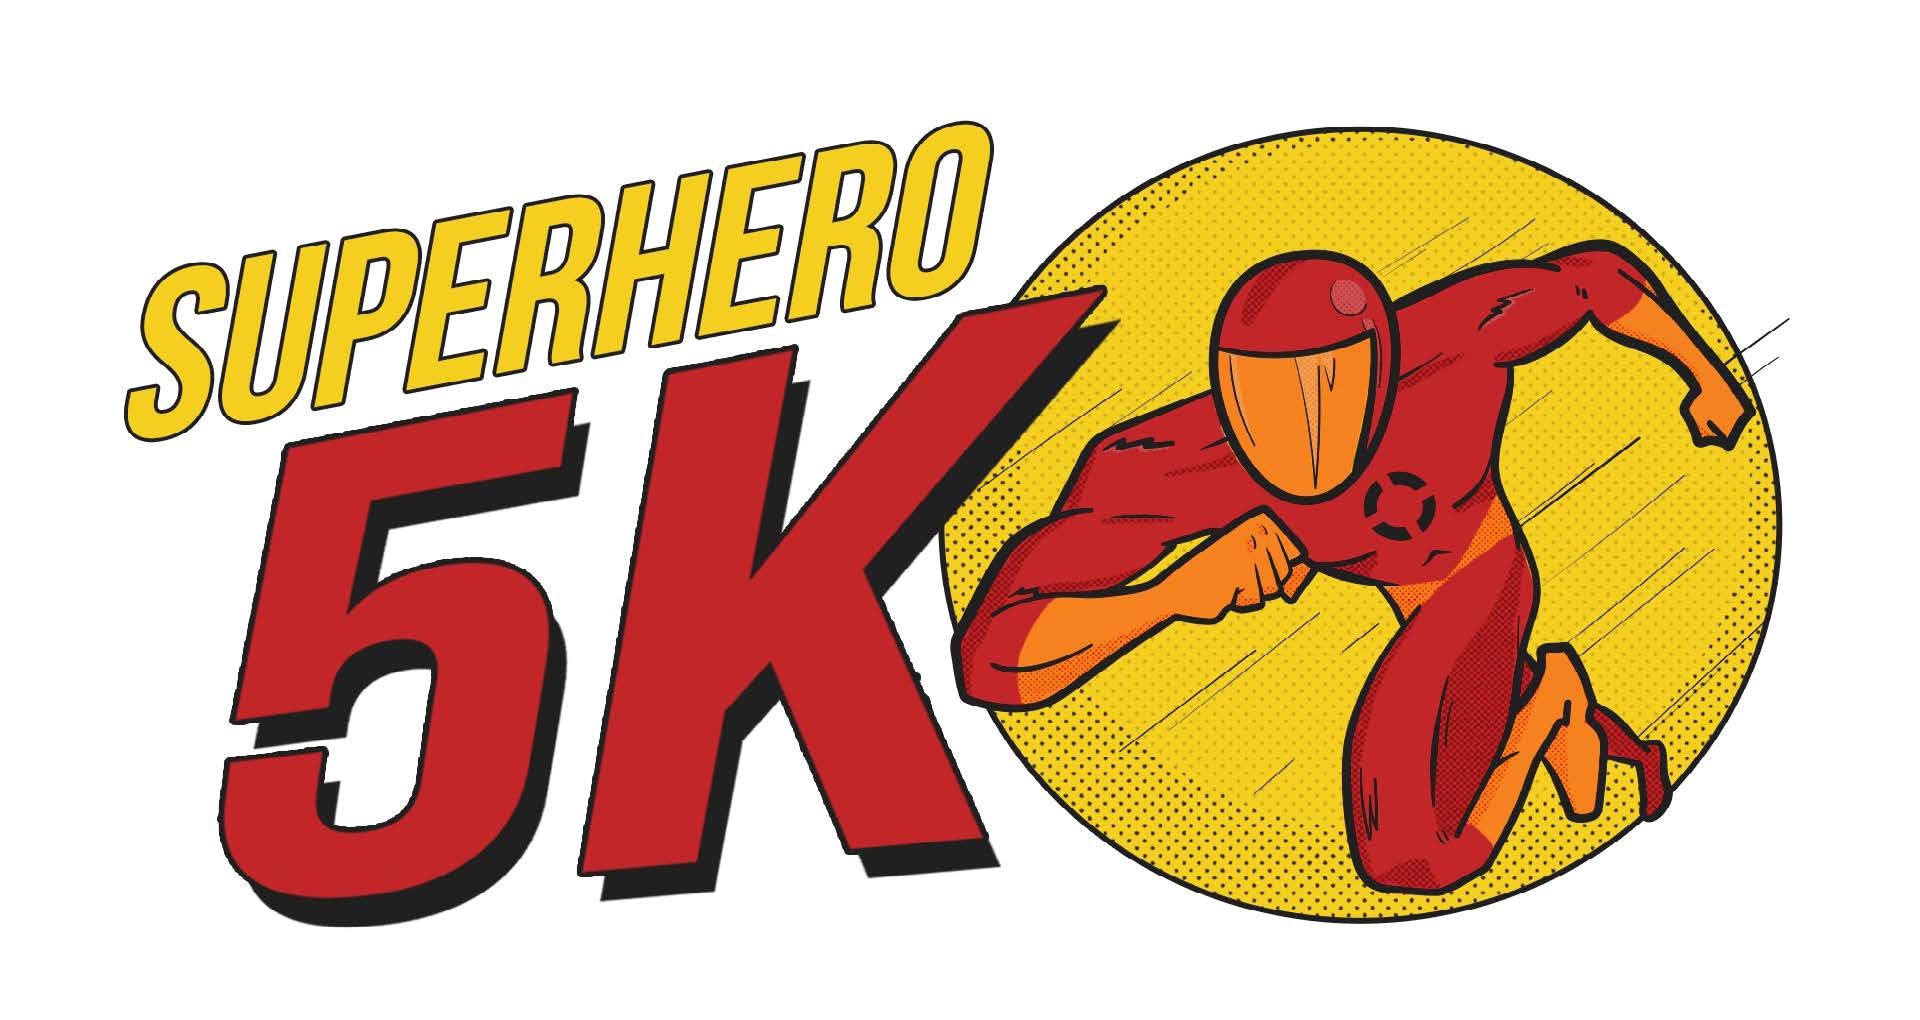 PTA Club to host Superhero 5K on April 21